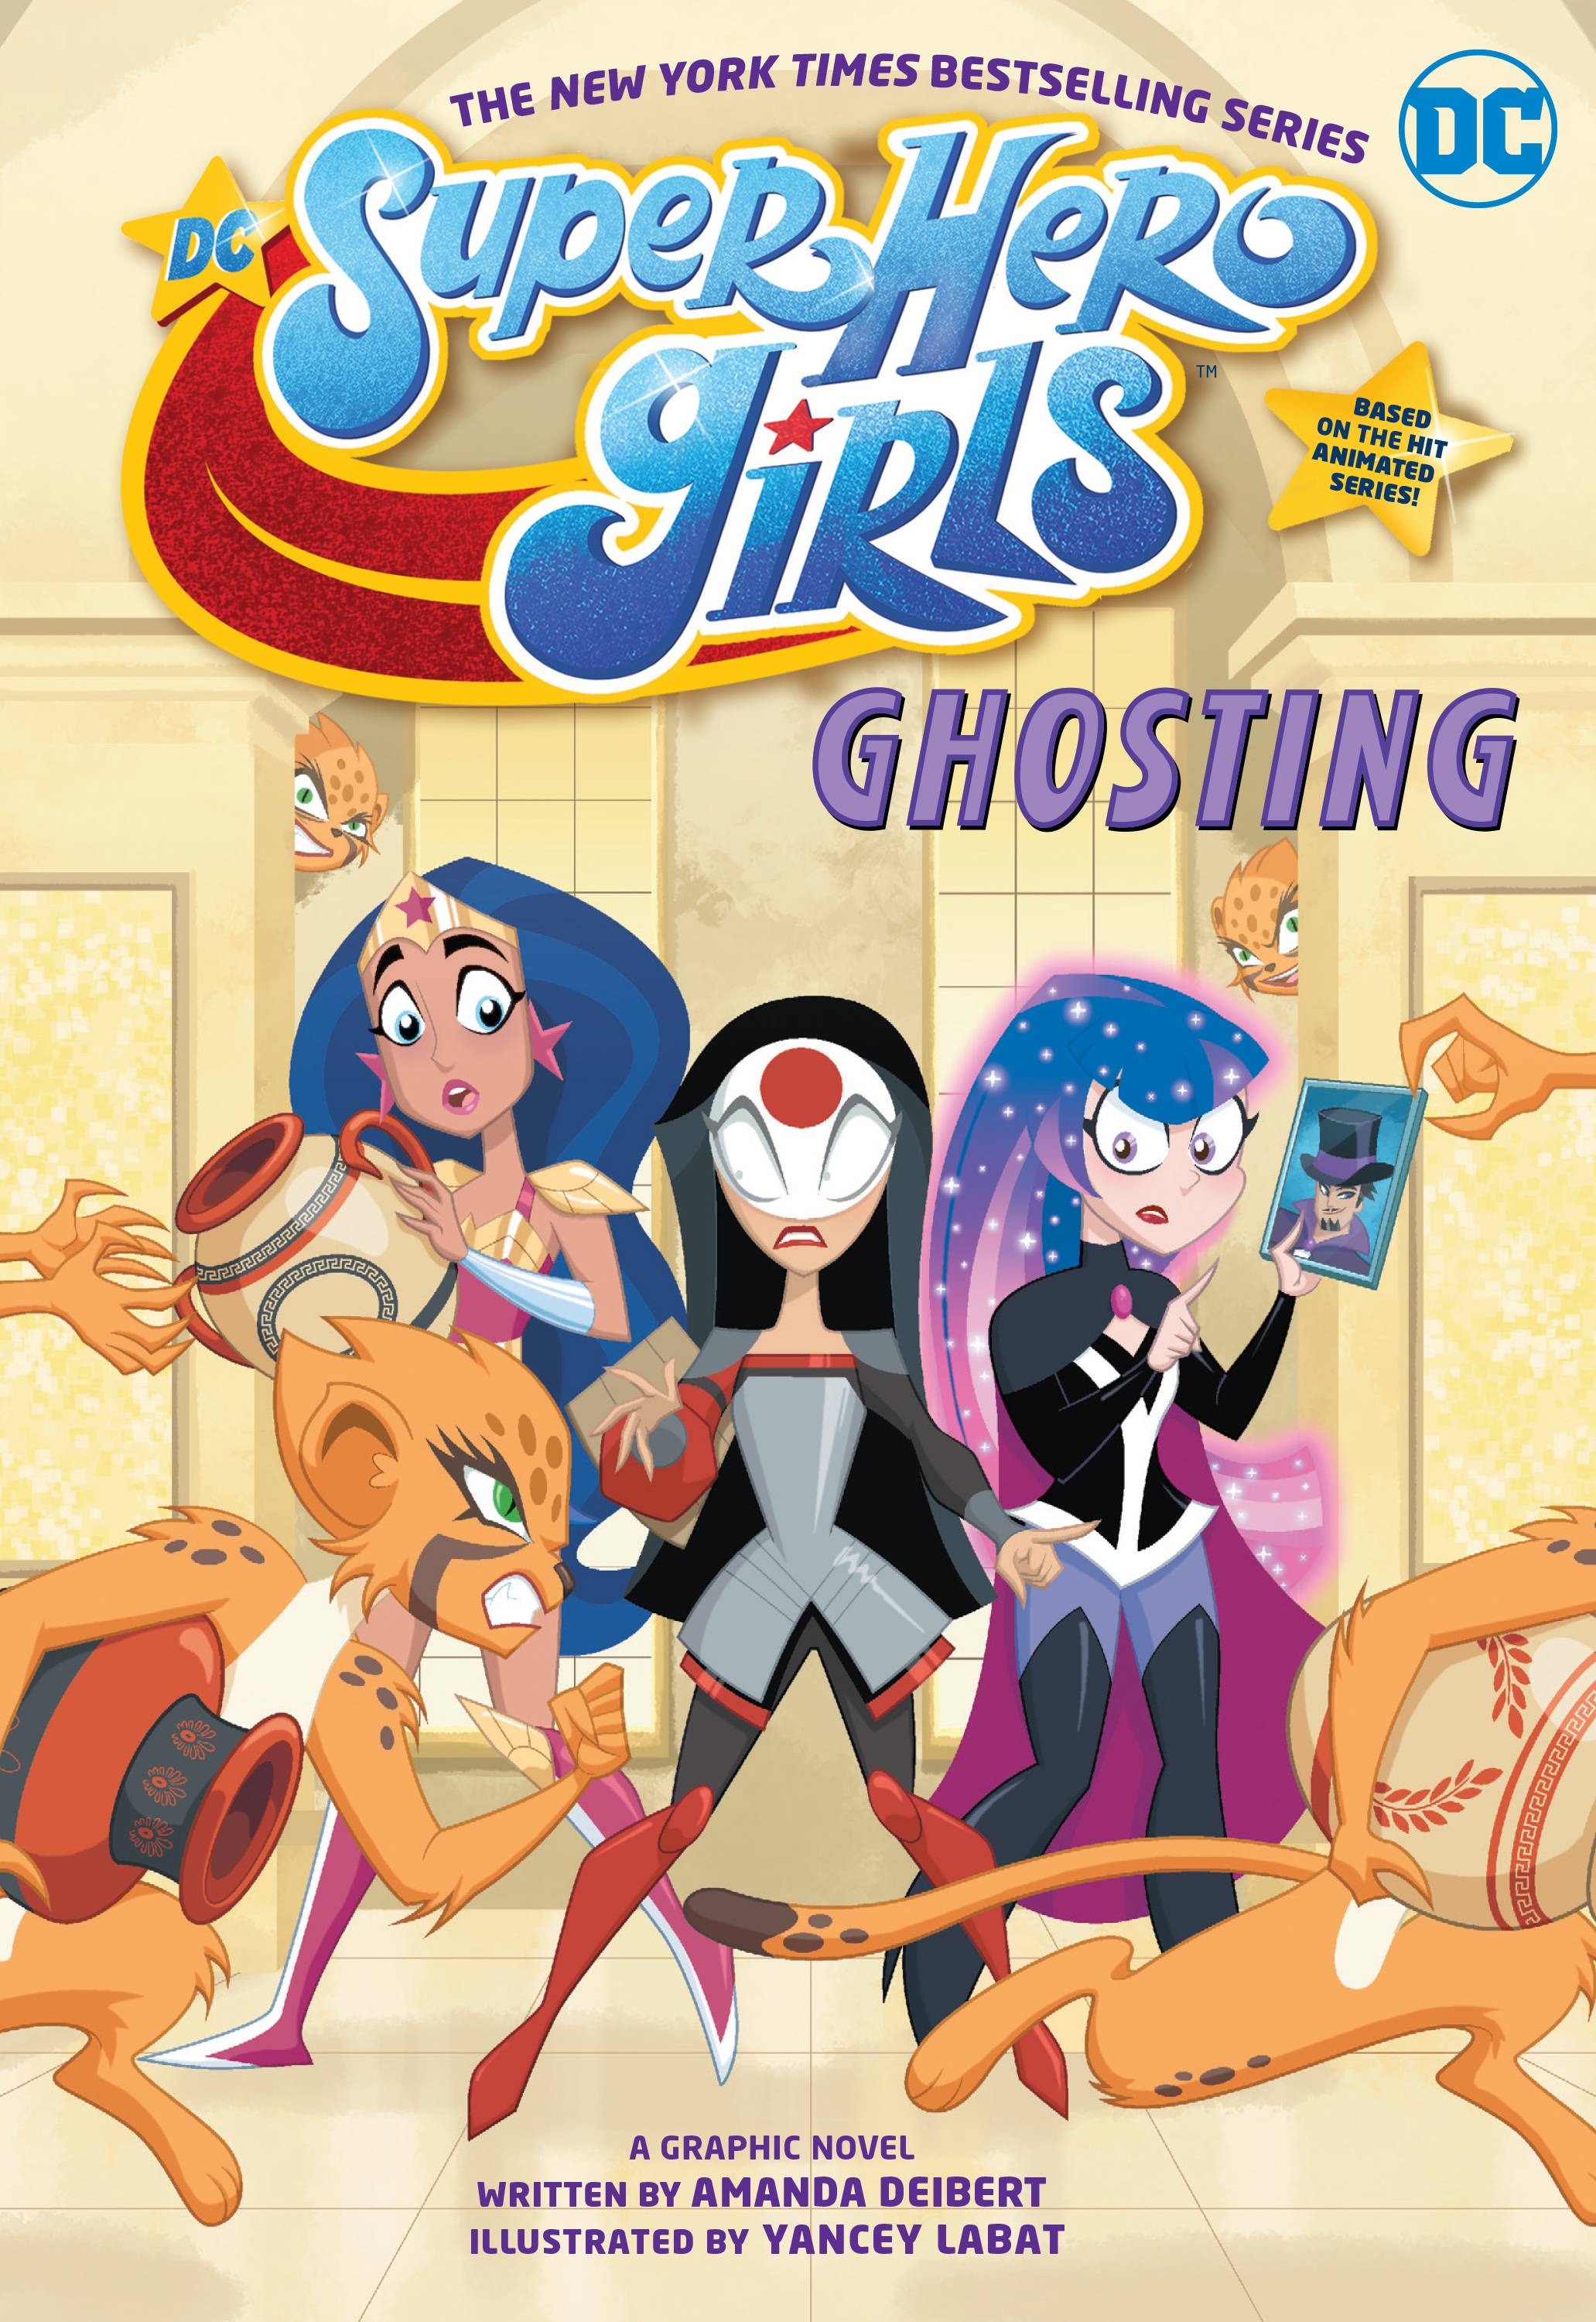 DC Super Hero Girls vol 13: Ghosting s/c